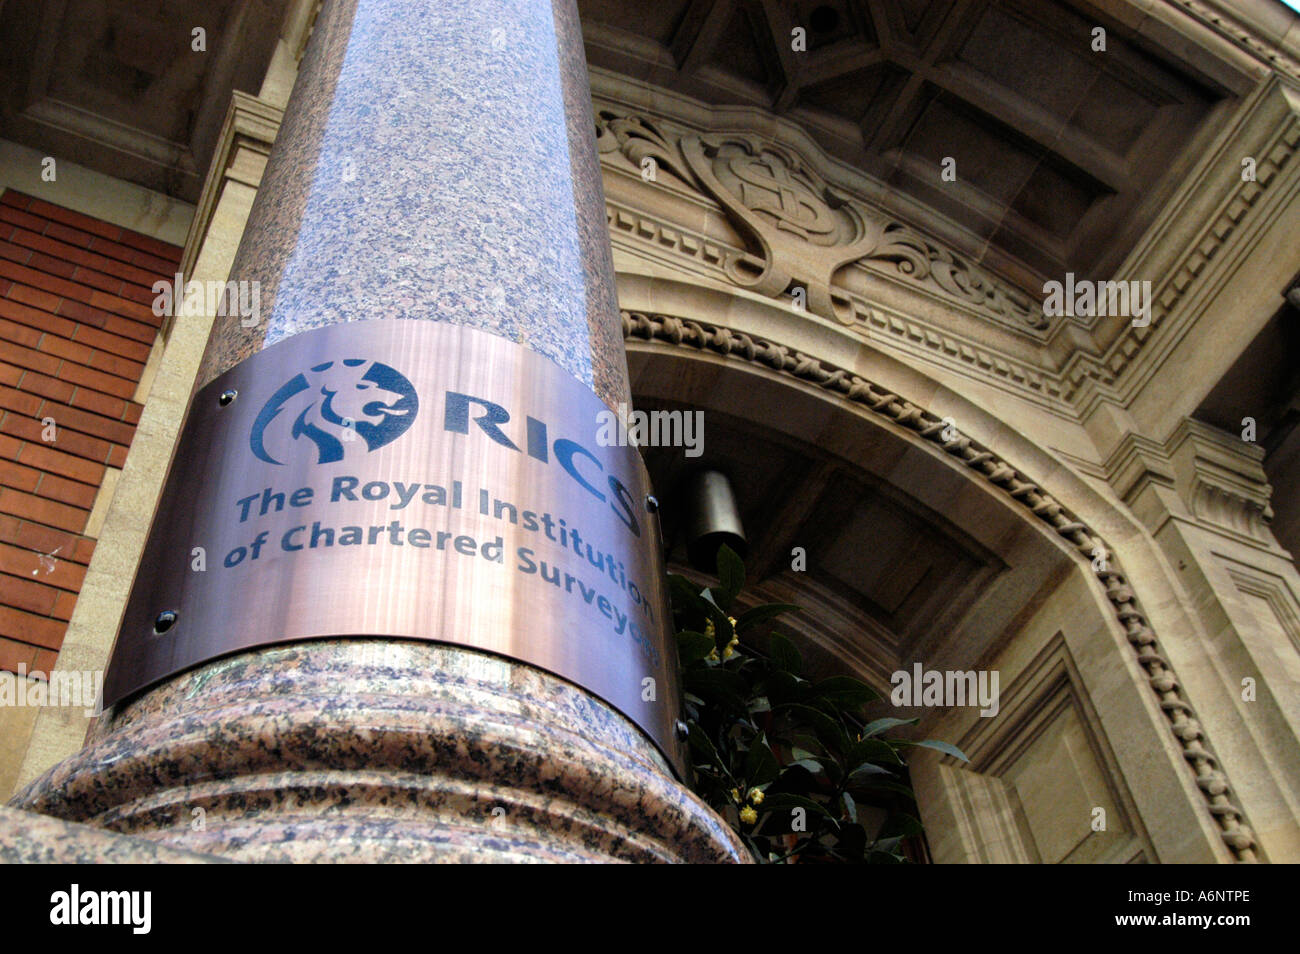 The Royal Institution of Chartered Surveyors, London, England, Britain, UK Stock Photo